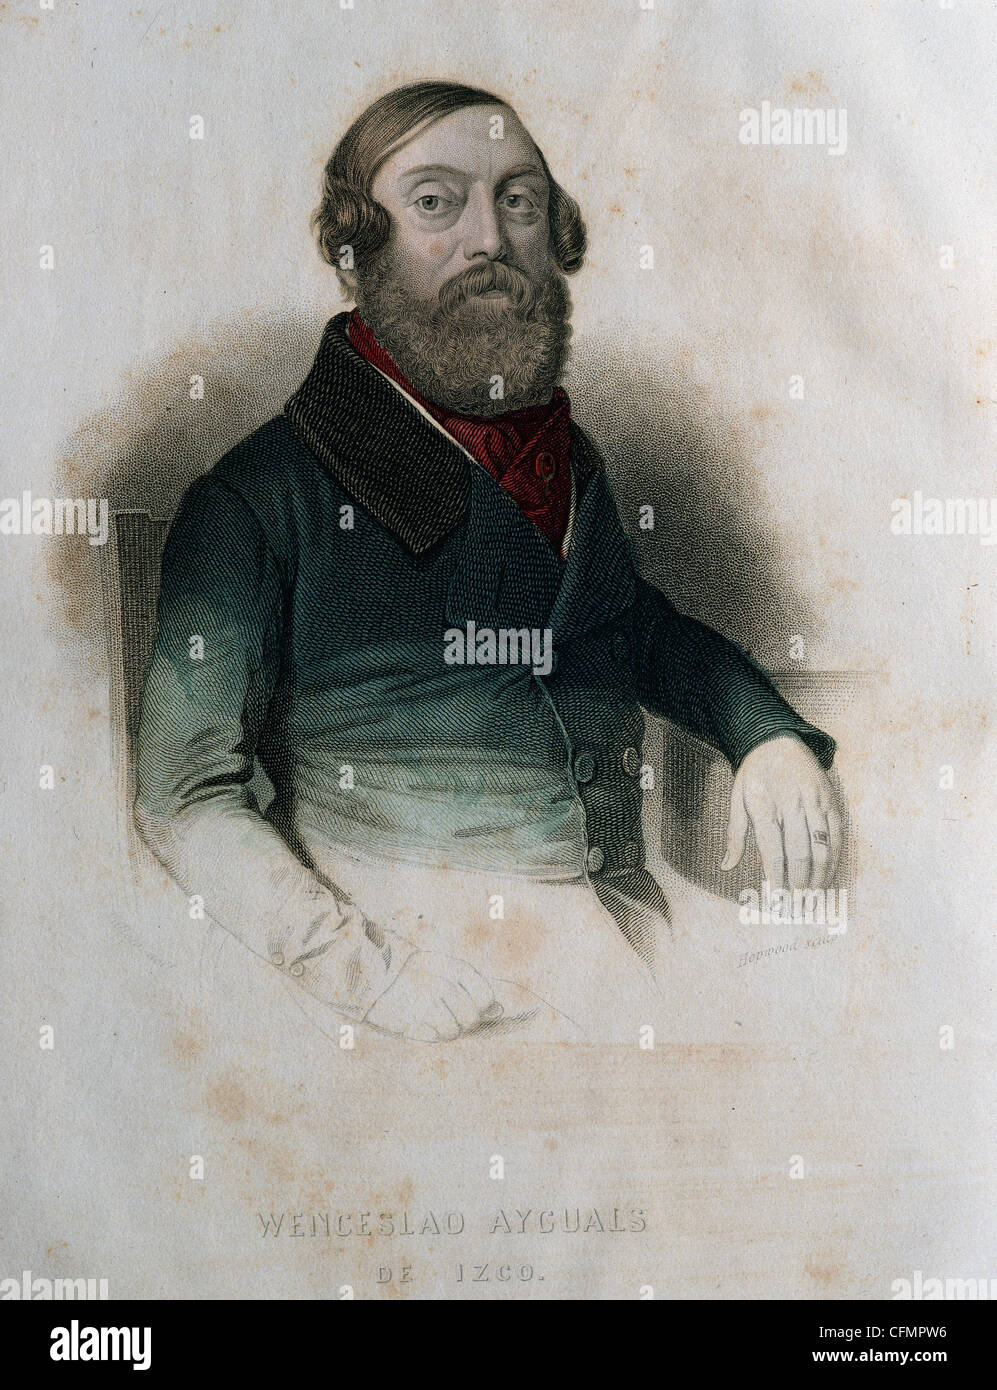 Wenceslao Ayguals de Izco (1801-1875). L'écrivain espagnol. La gravure. 1849. Banque D'Images